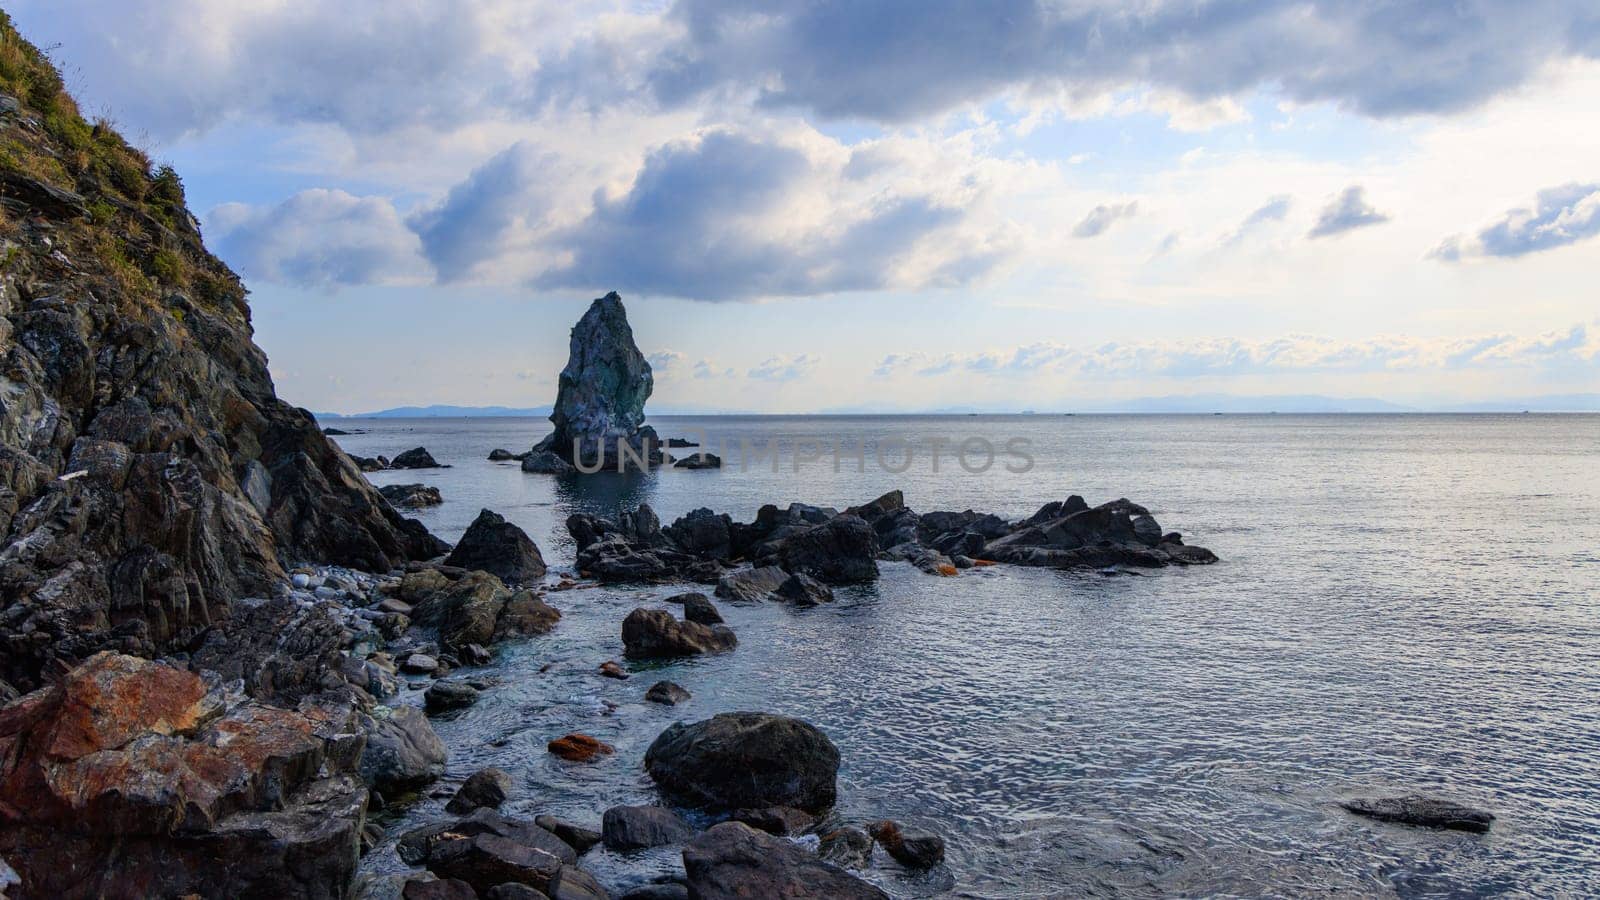 Sacred Kamitate Gamiiwa coastal rock formation with calm sea and horizon on cloudy morning by Osaze